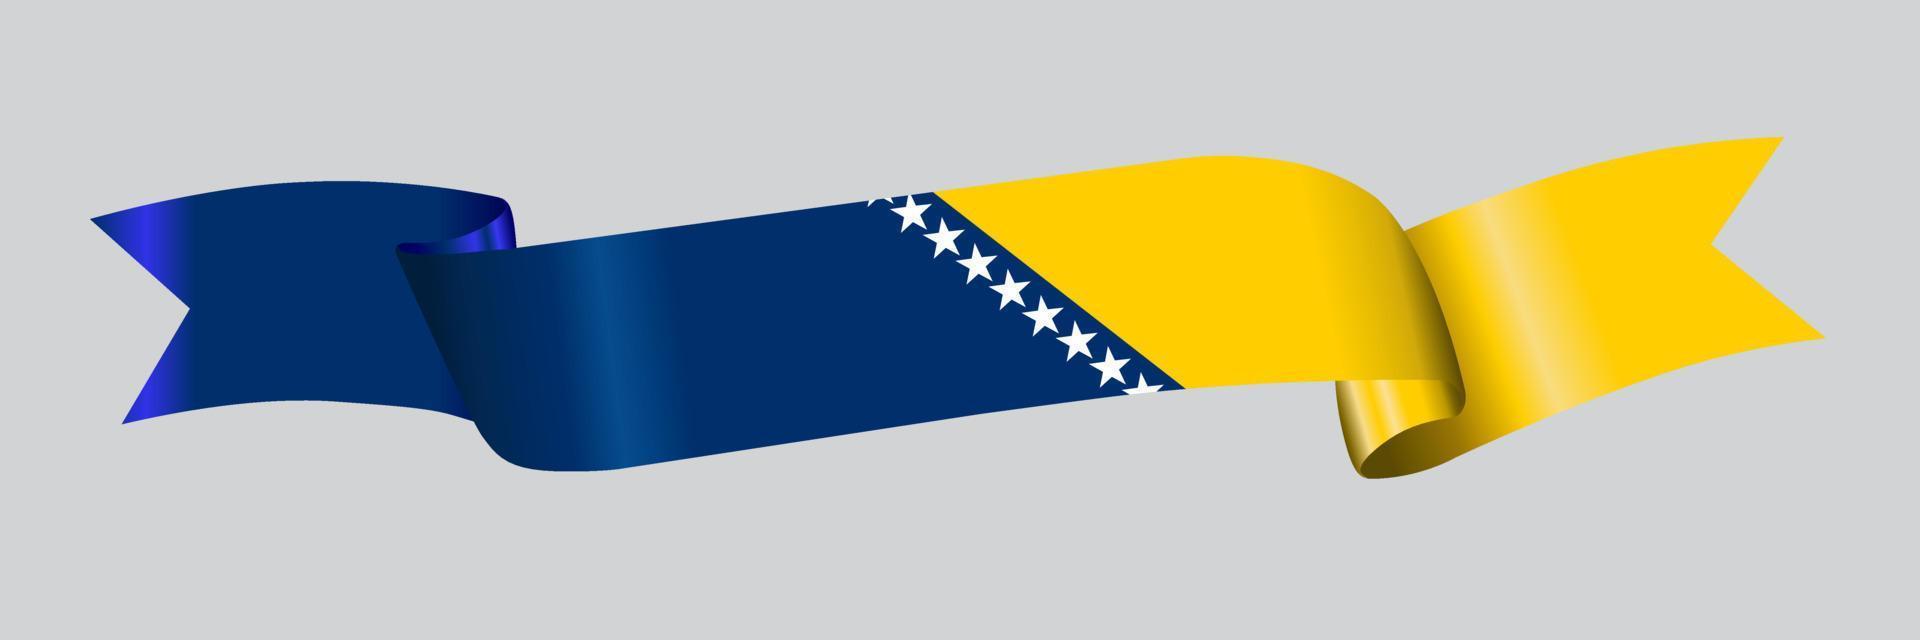 3d flagga av bosnien och herzegovina på band. vektor